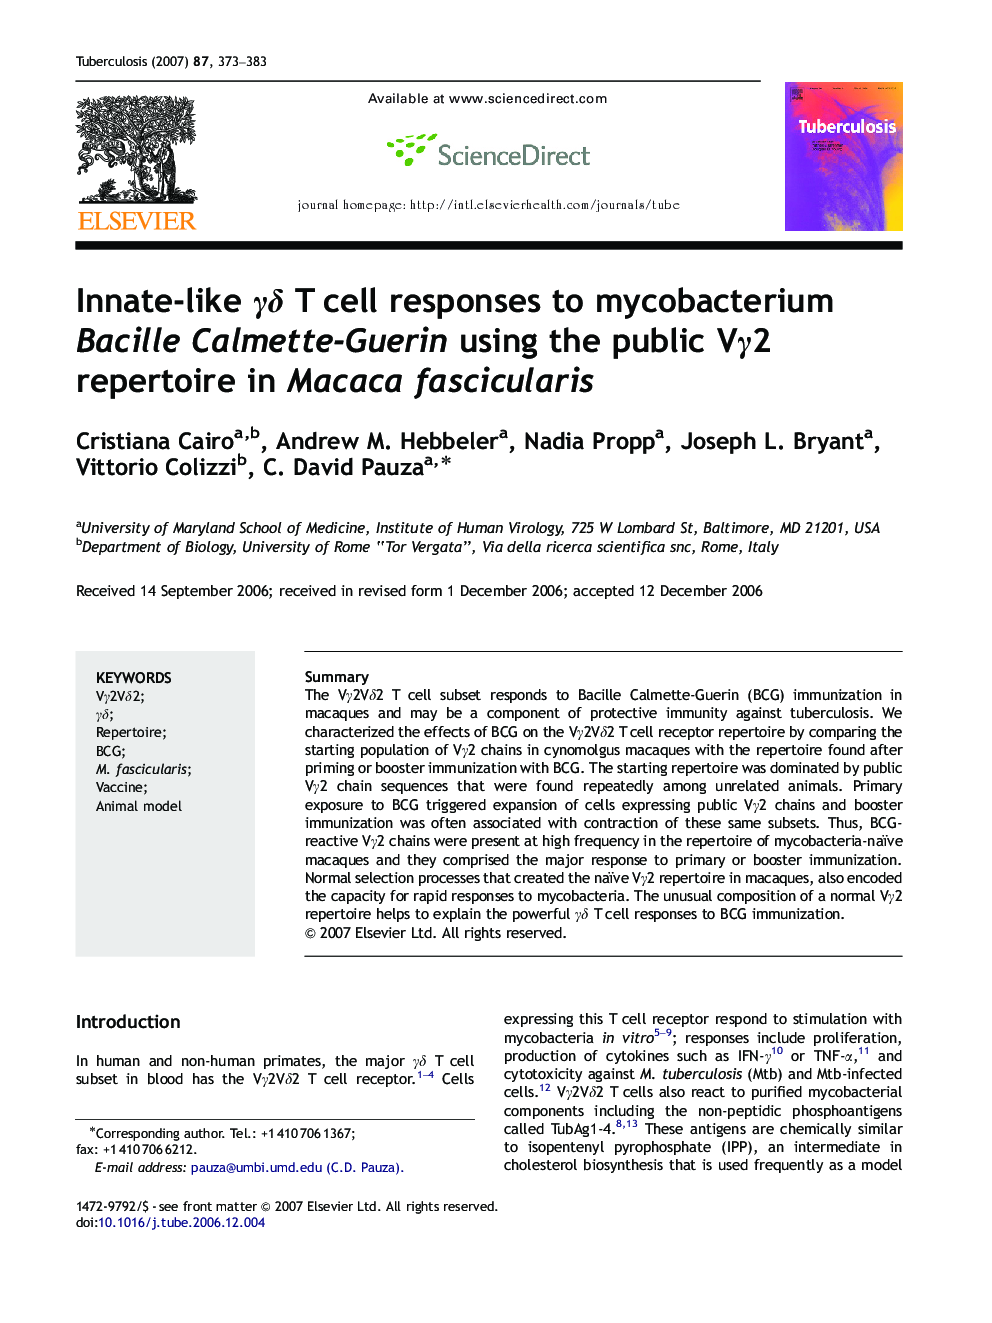 Innate-like Î³Î´ T cell responses to mycobacterium Bacille Calmette-Guerin using the public VÎ³2 repertoire in Macaca fascicularis